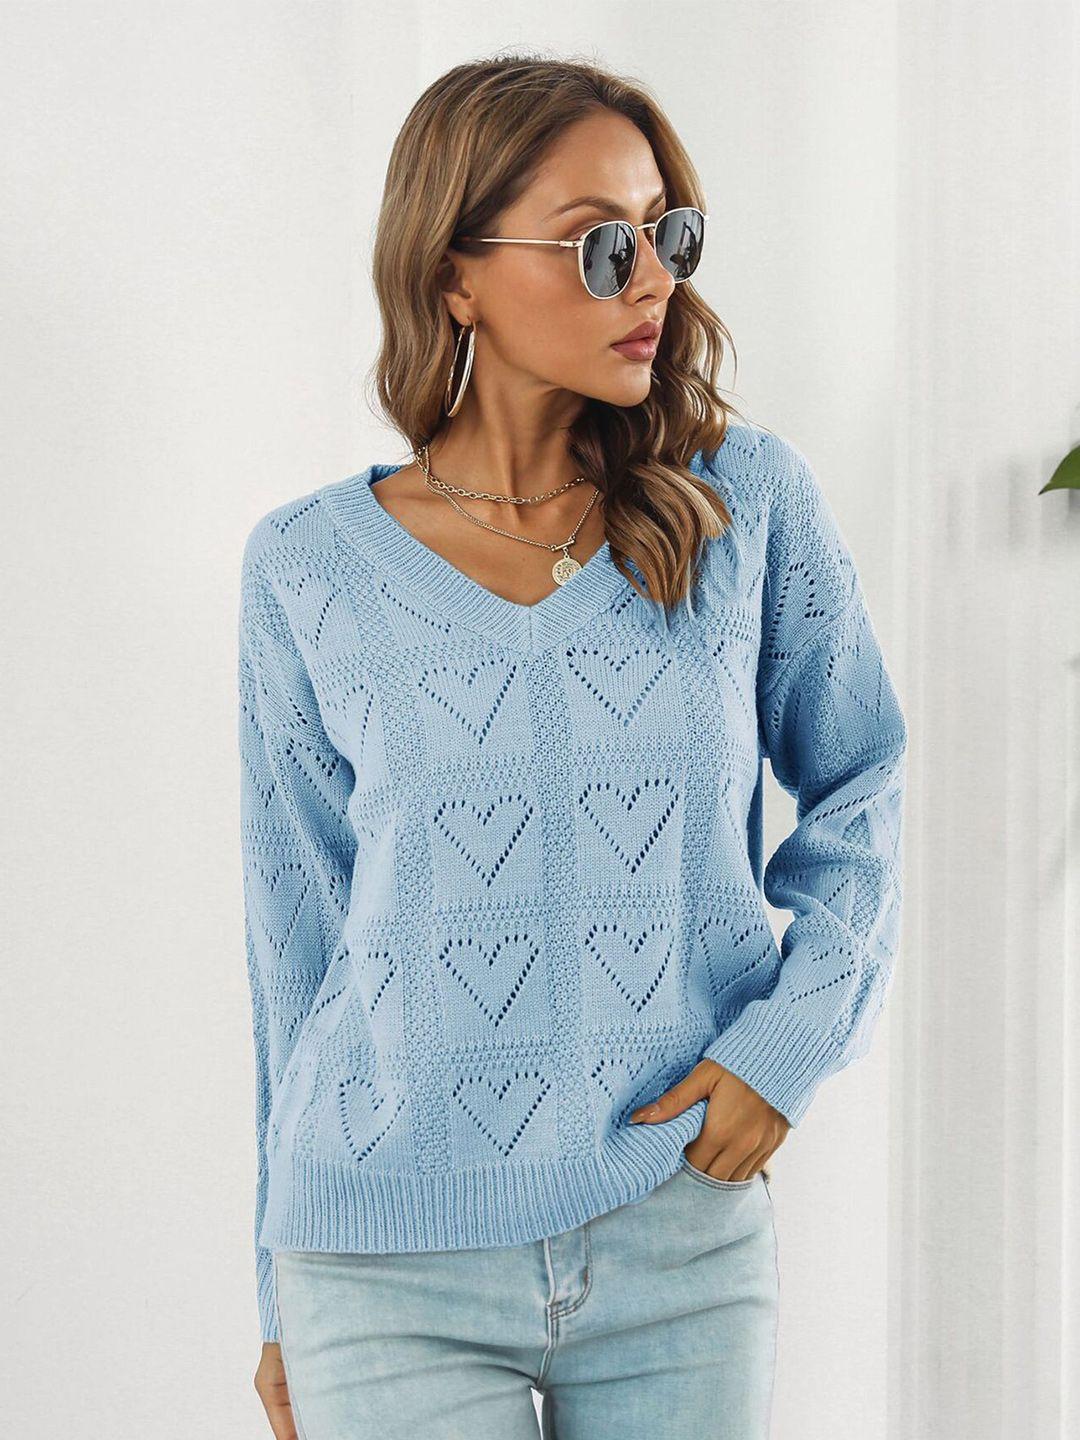 stylecast-women-blue-pullover-sweater